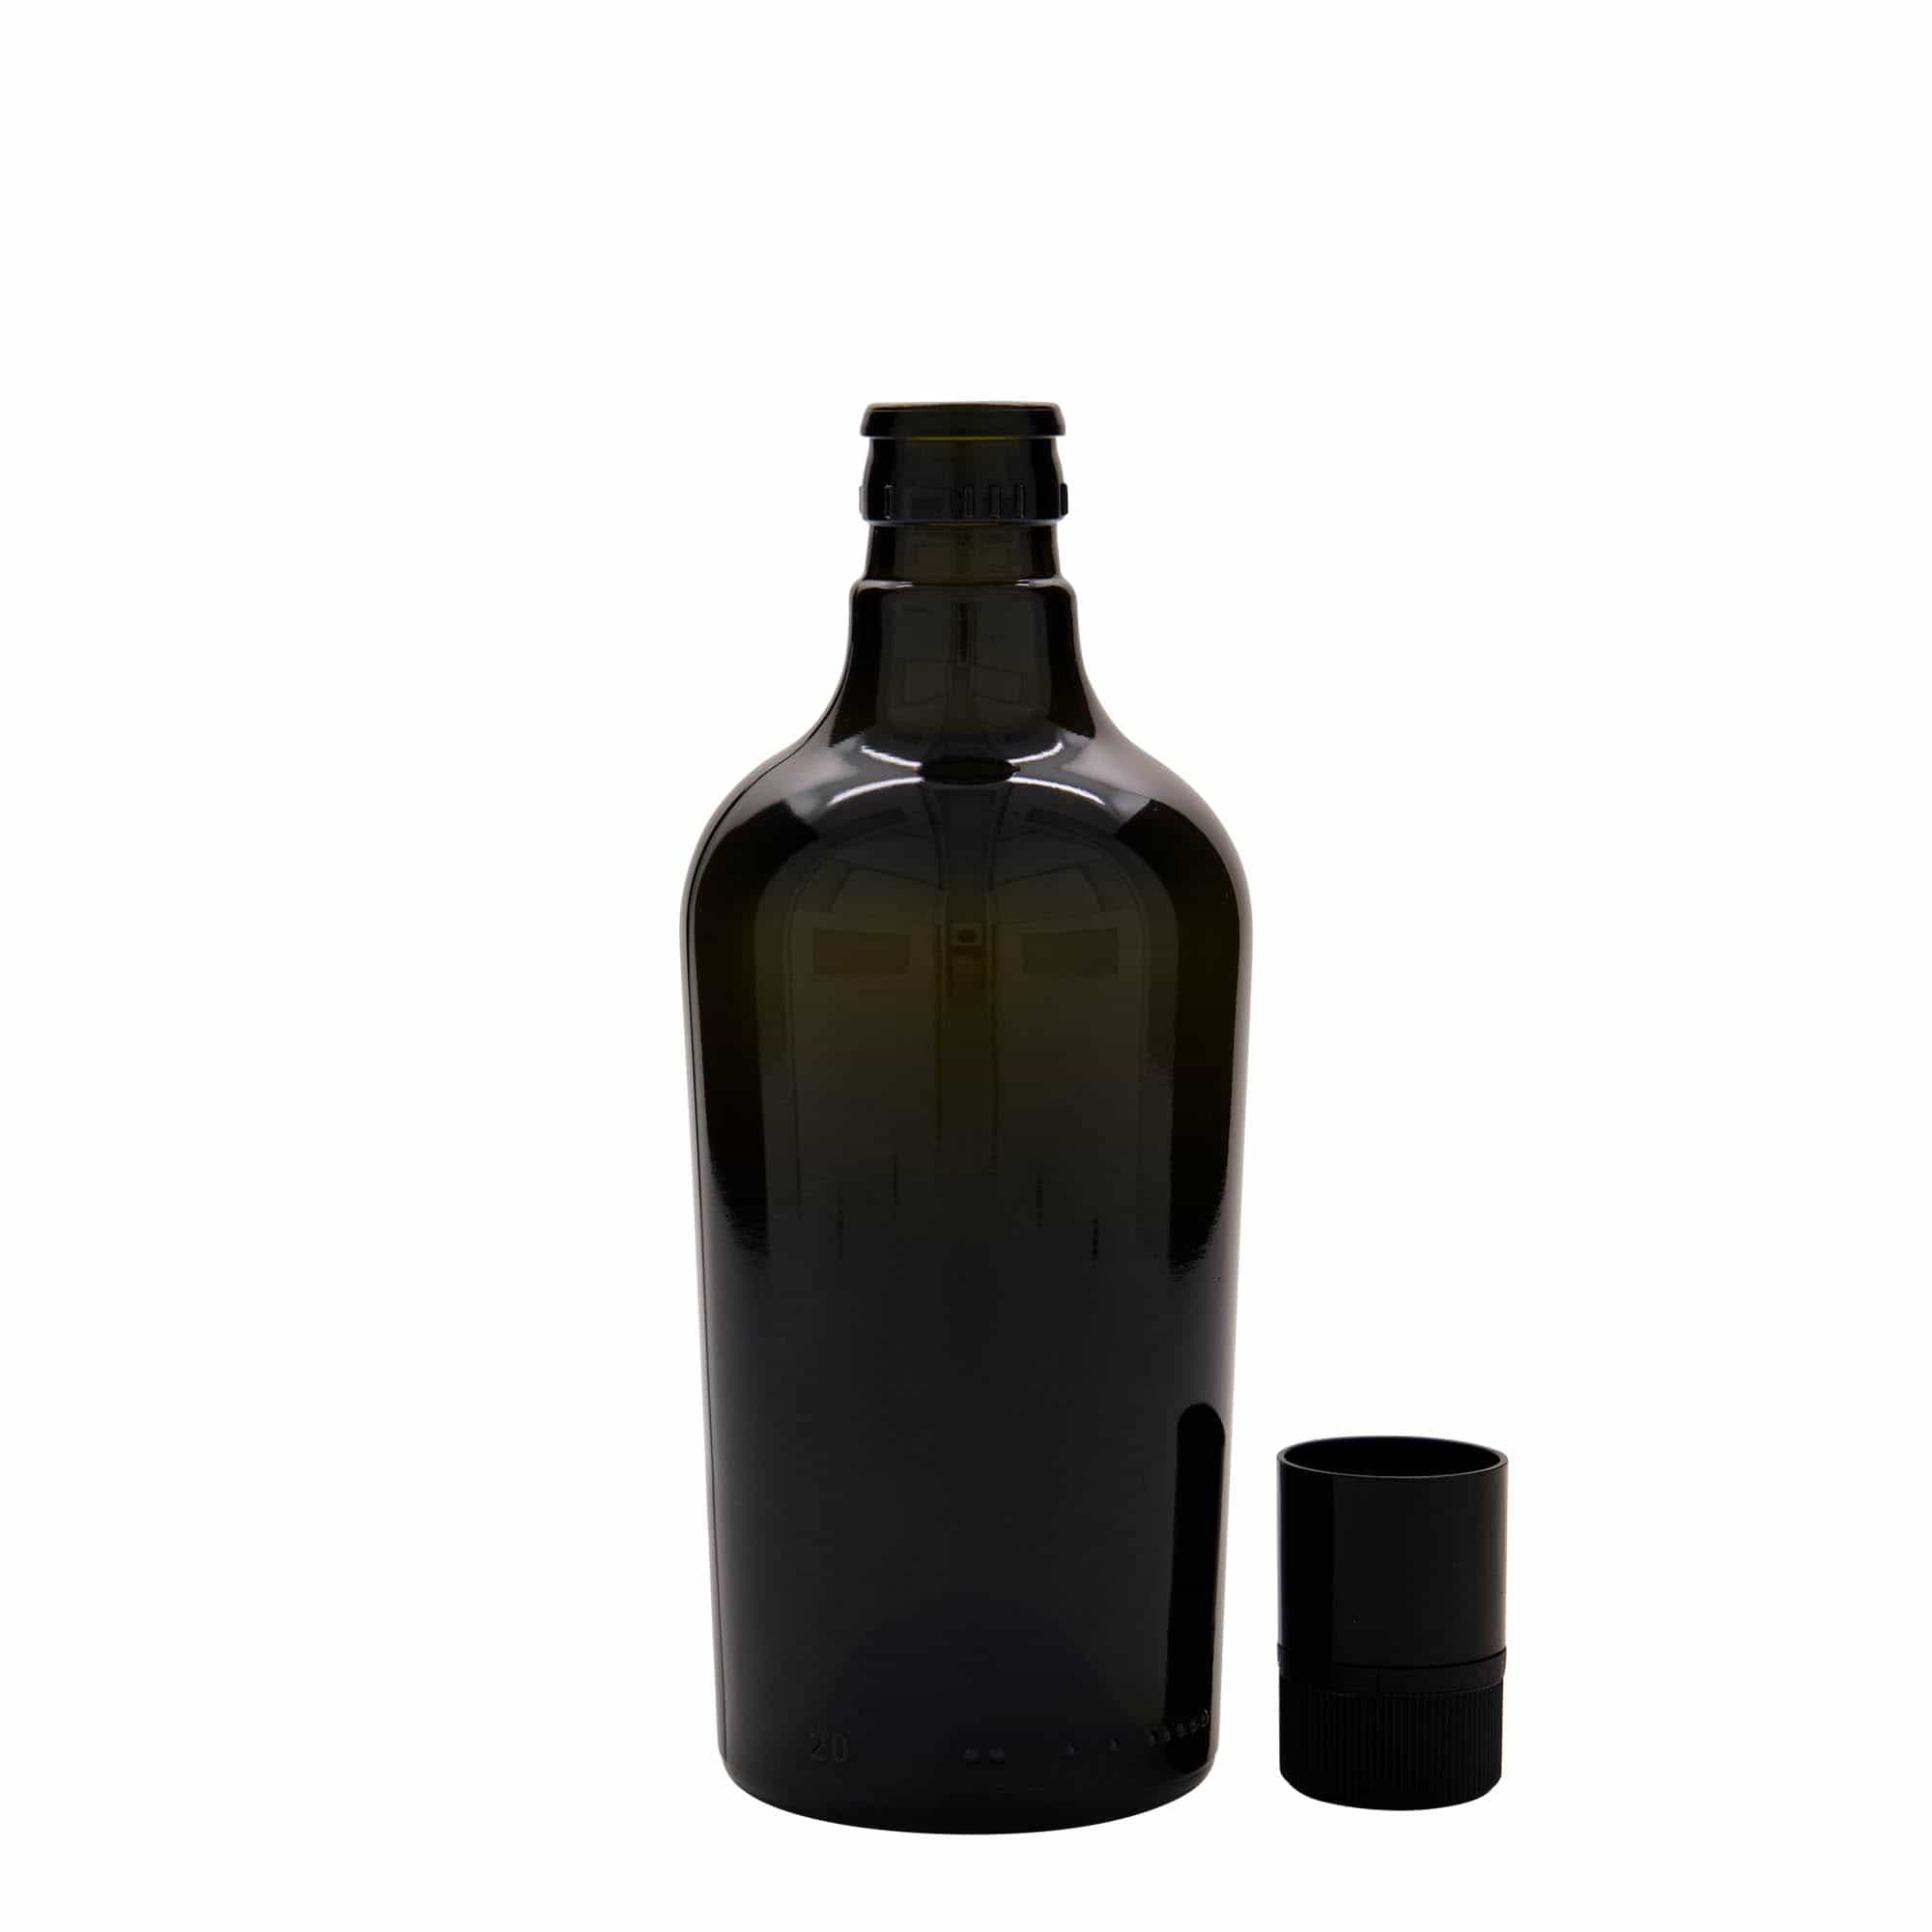 500 ml eddike-/olieflaske 'Oleum', glas, antikgrøn, åbning: DOP